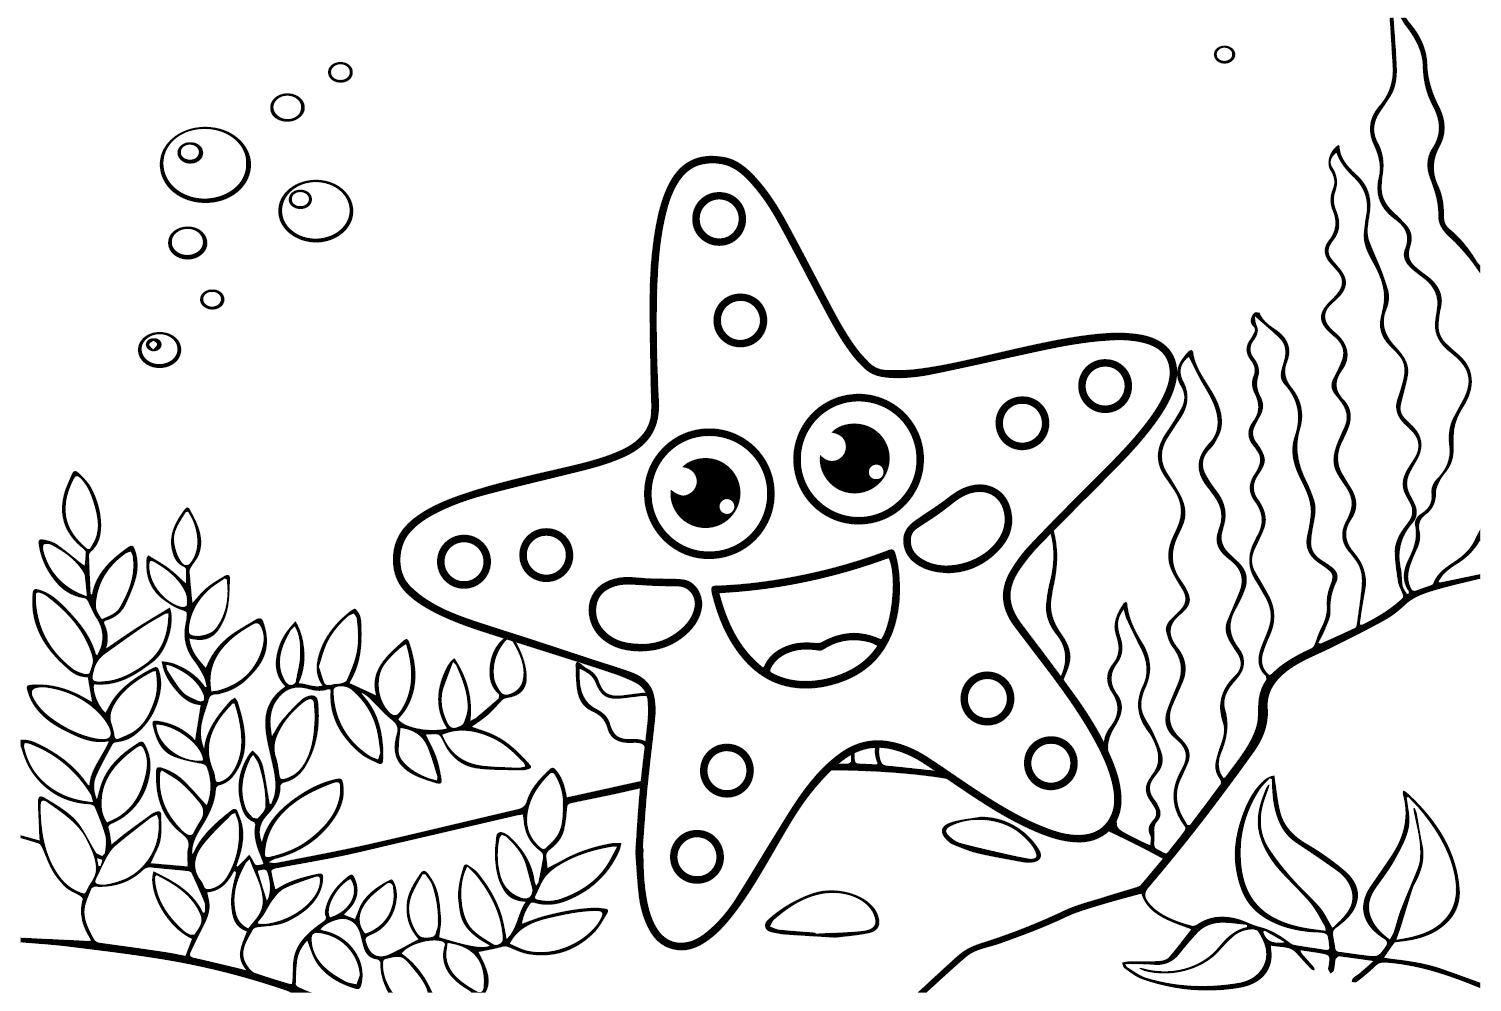 Starfish Pictures from Starfish